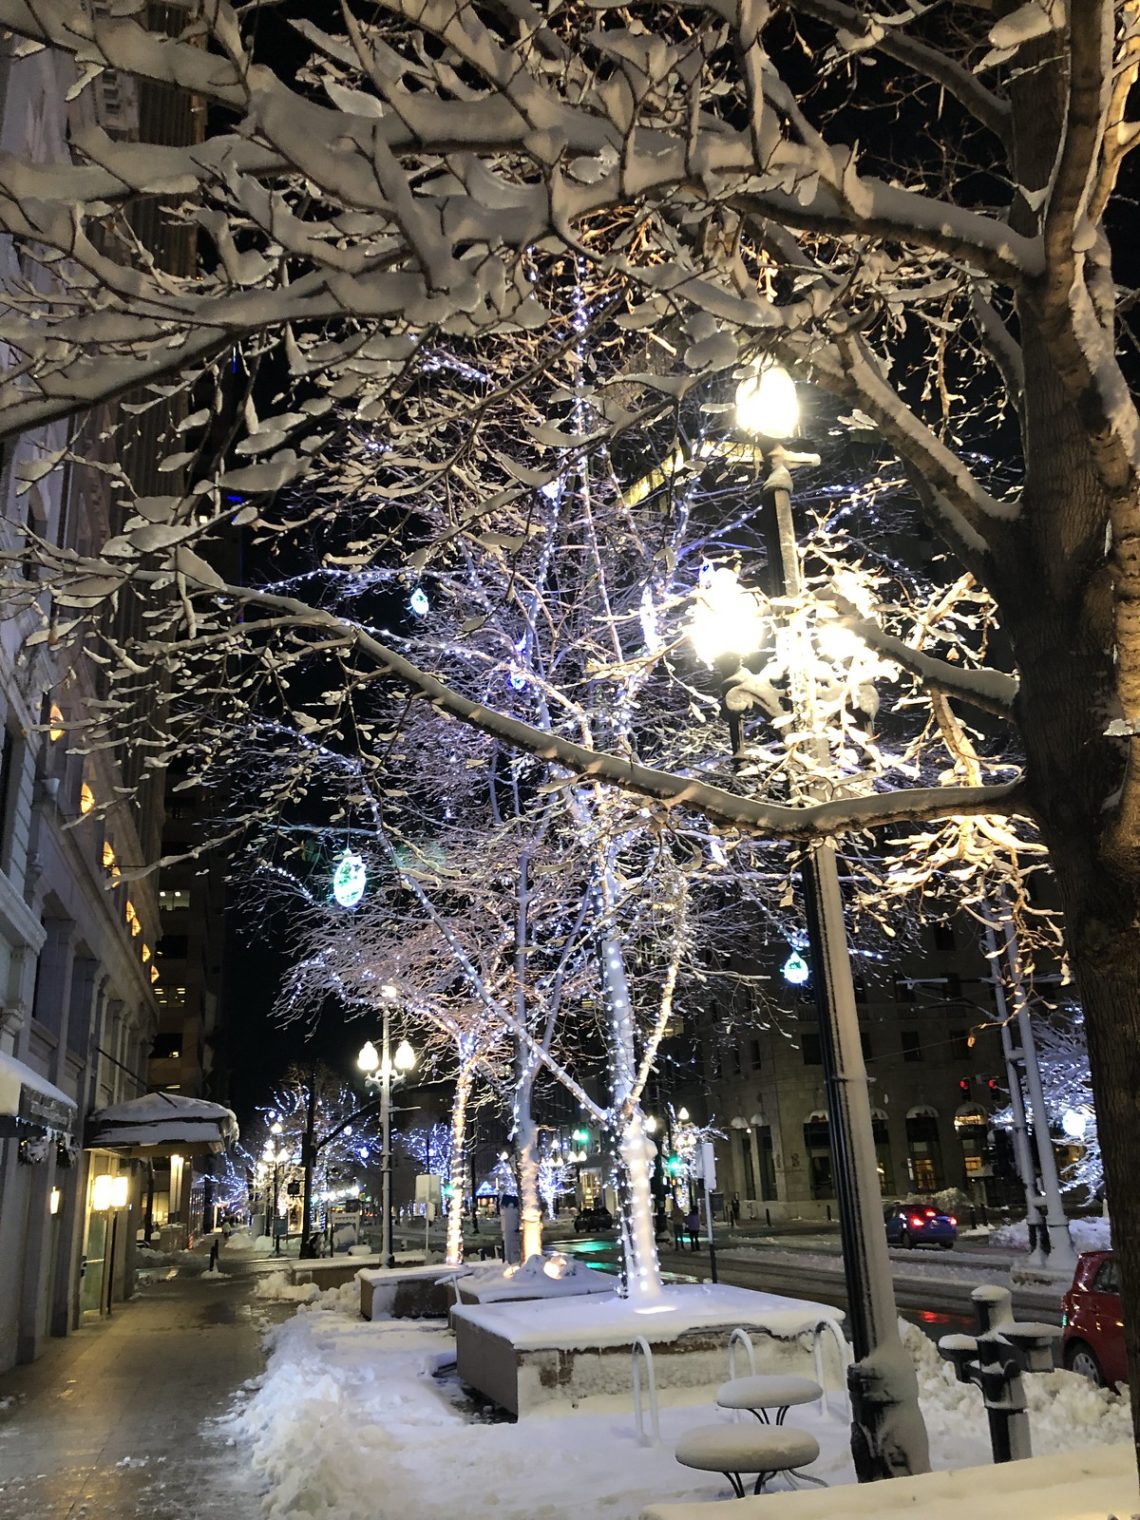 Snow covered trees on Main Street in Salt Lake City